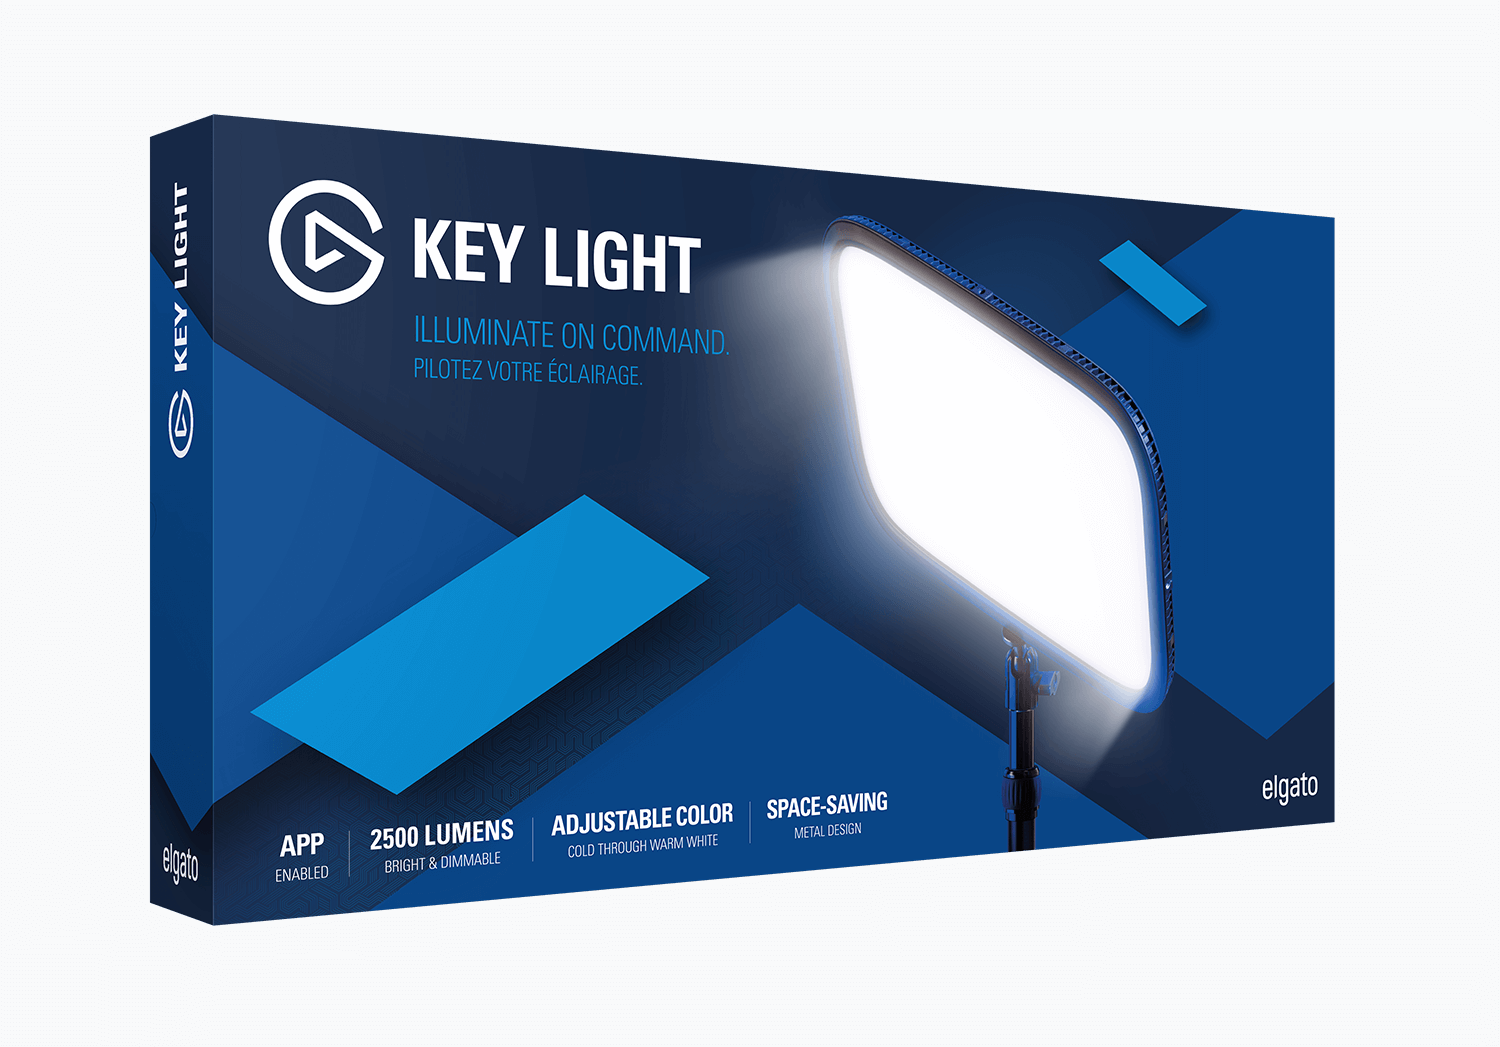 elgato key light software